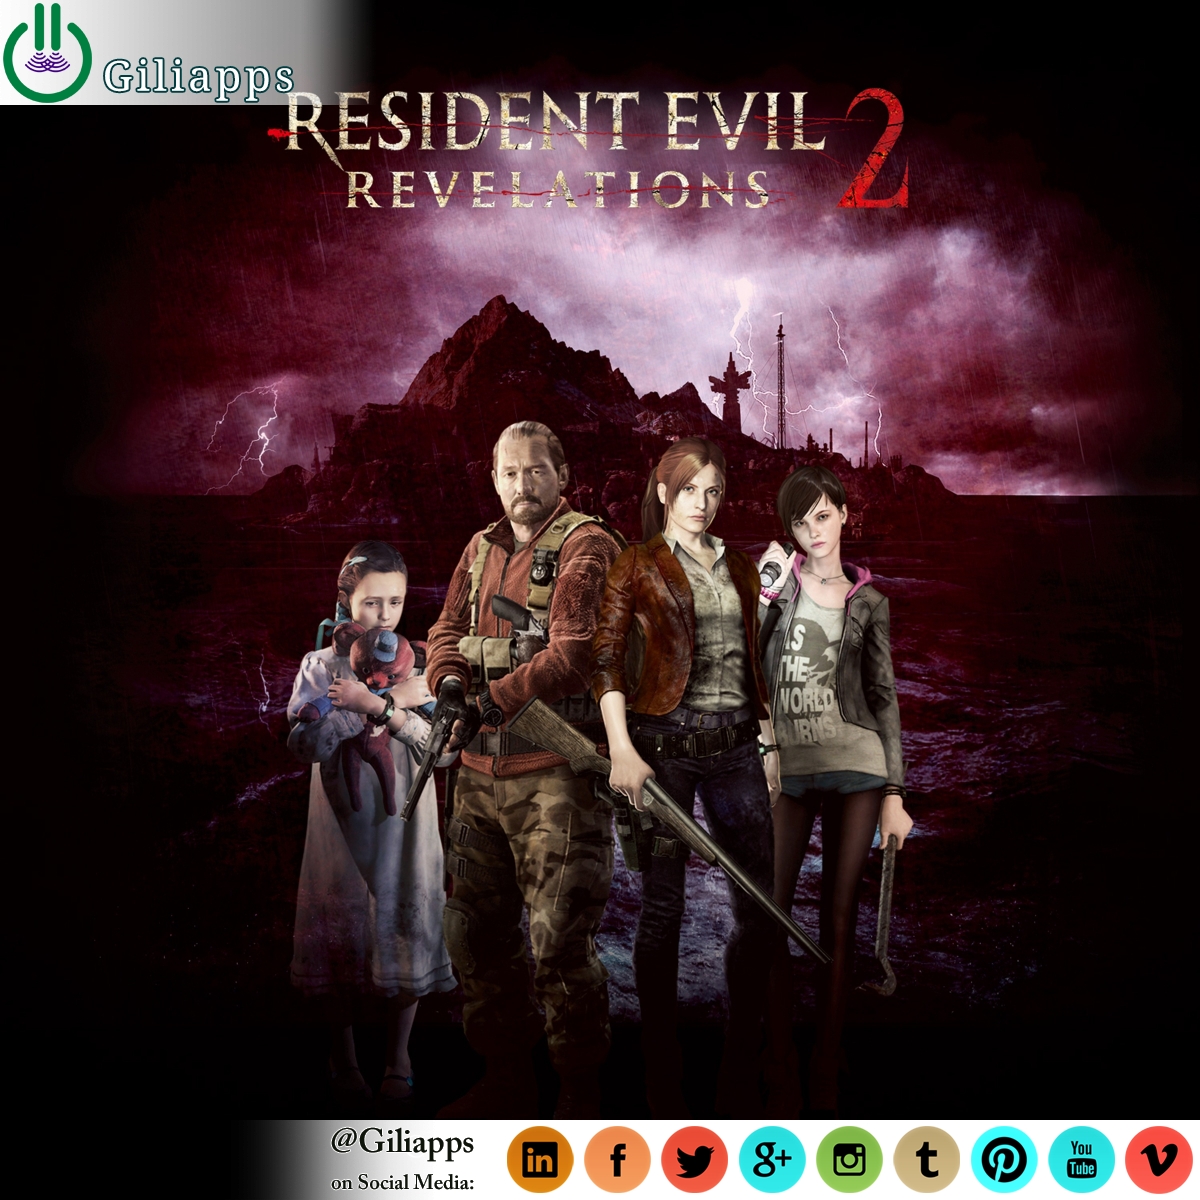 Nintendo Switch version of Resident Evil: Revelations 2 will release on 28 Nov 2017